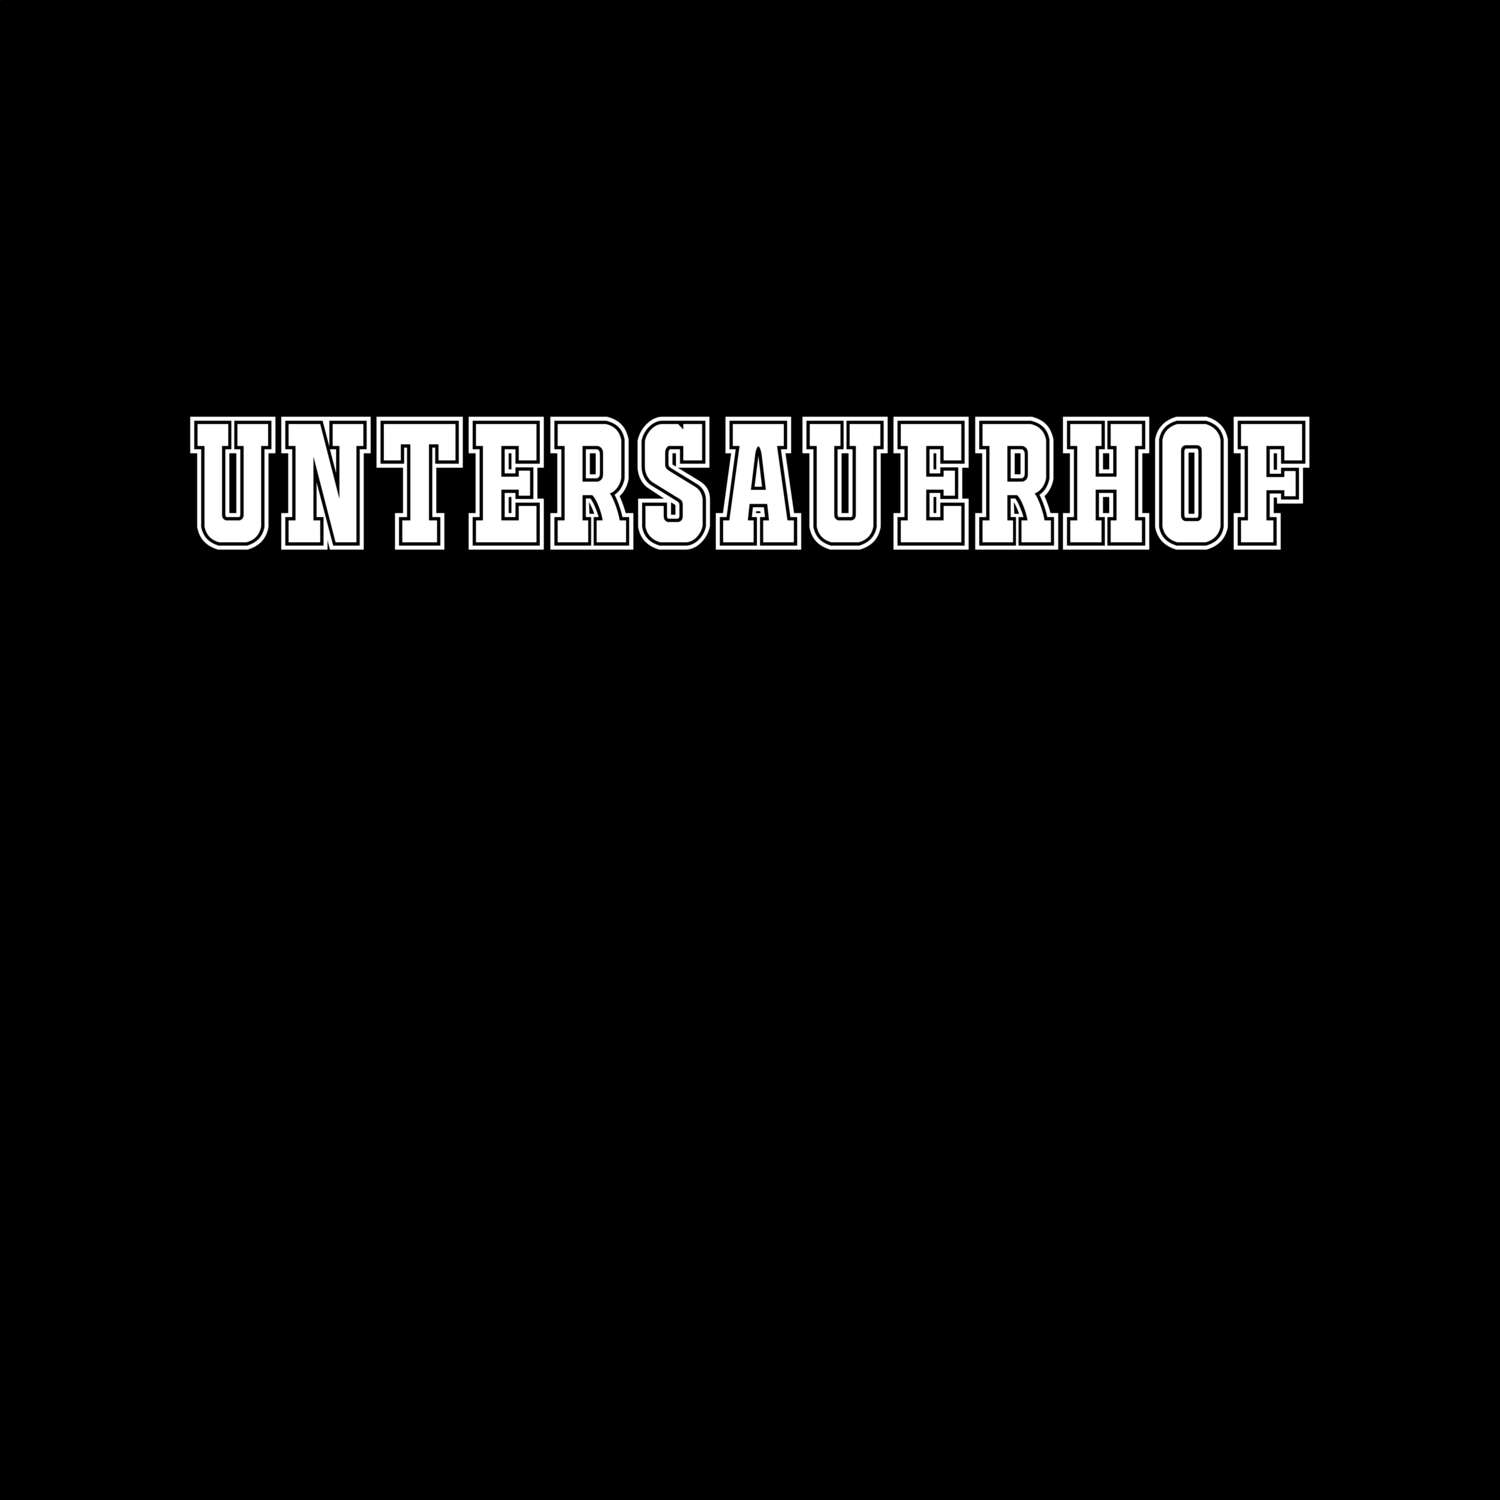 Untersauerhof T-Shirt »Classic«